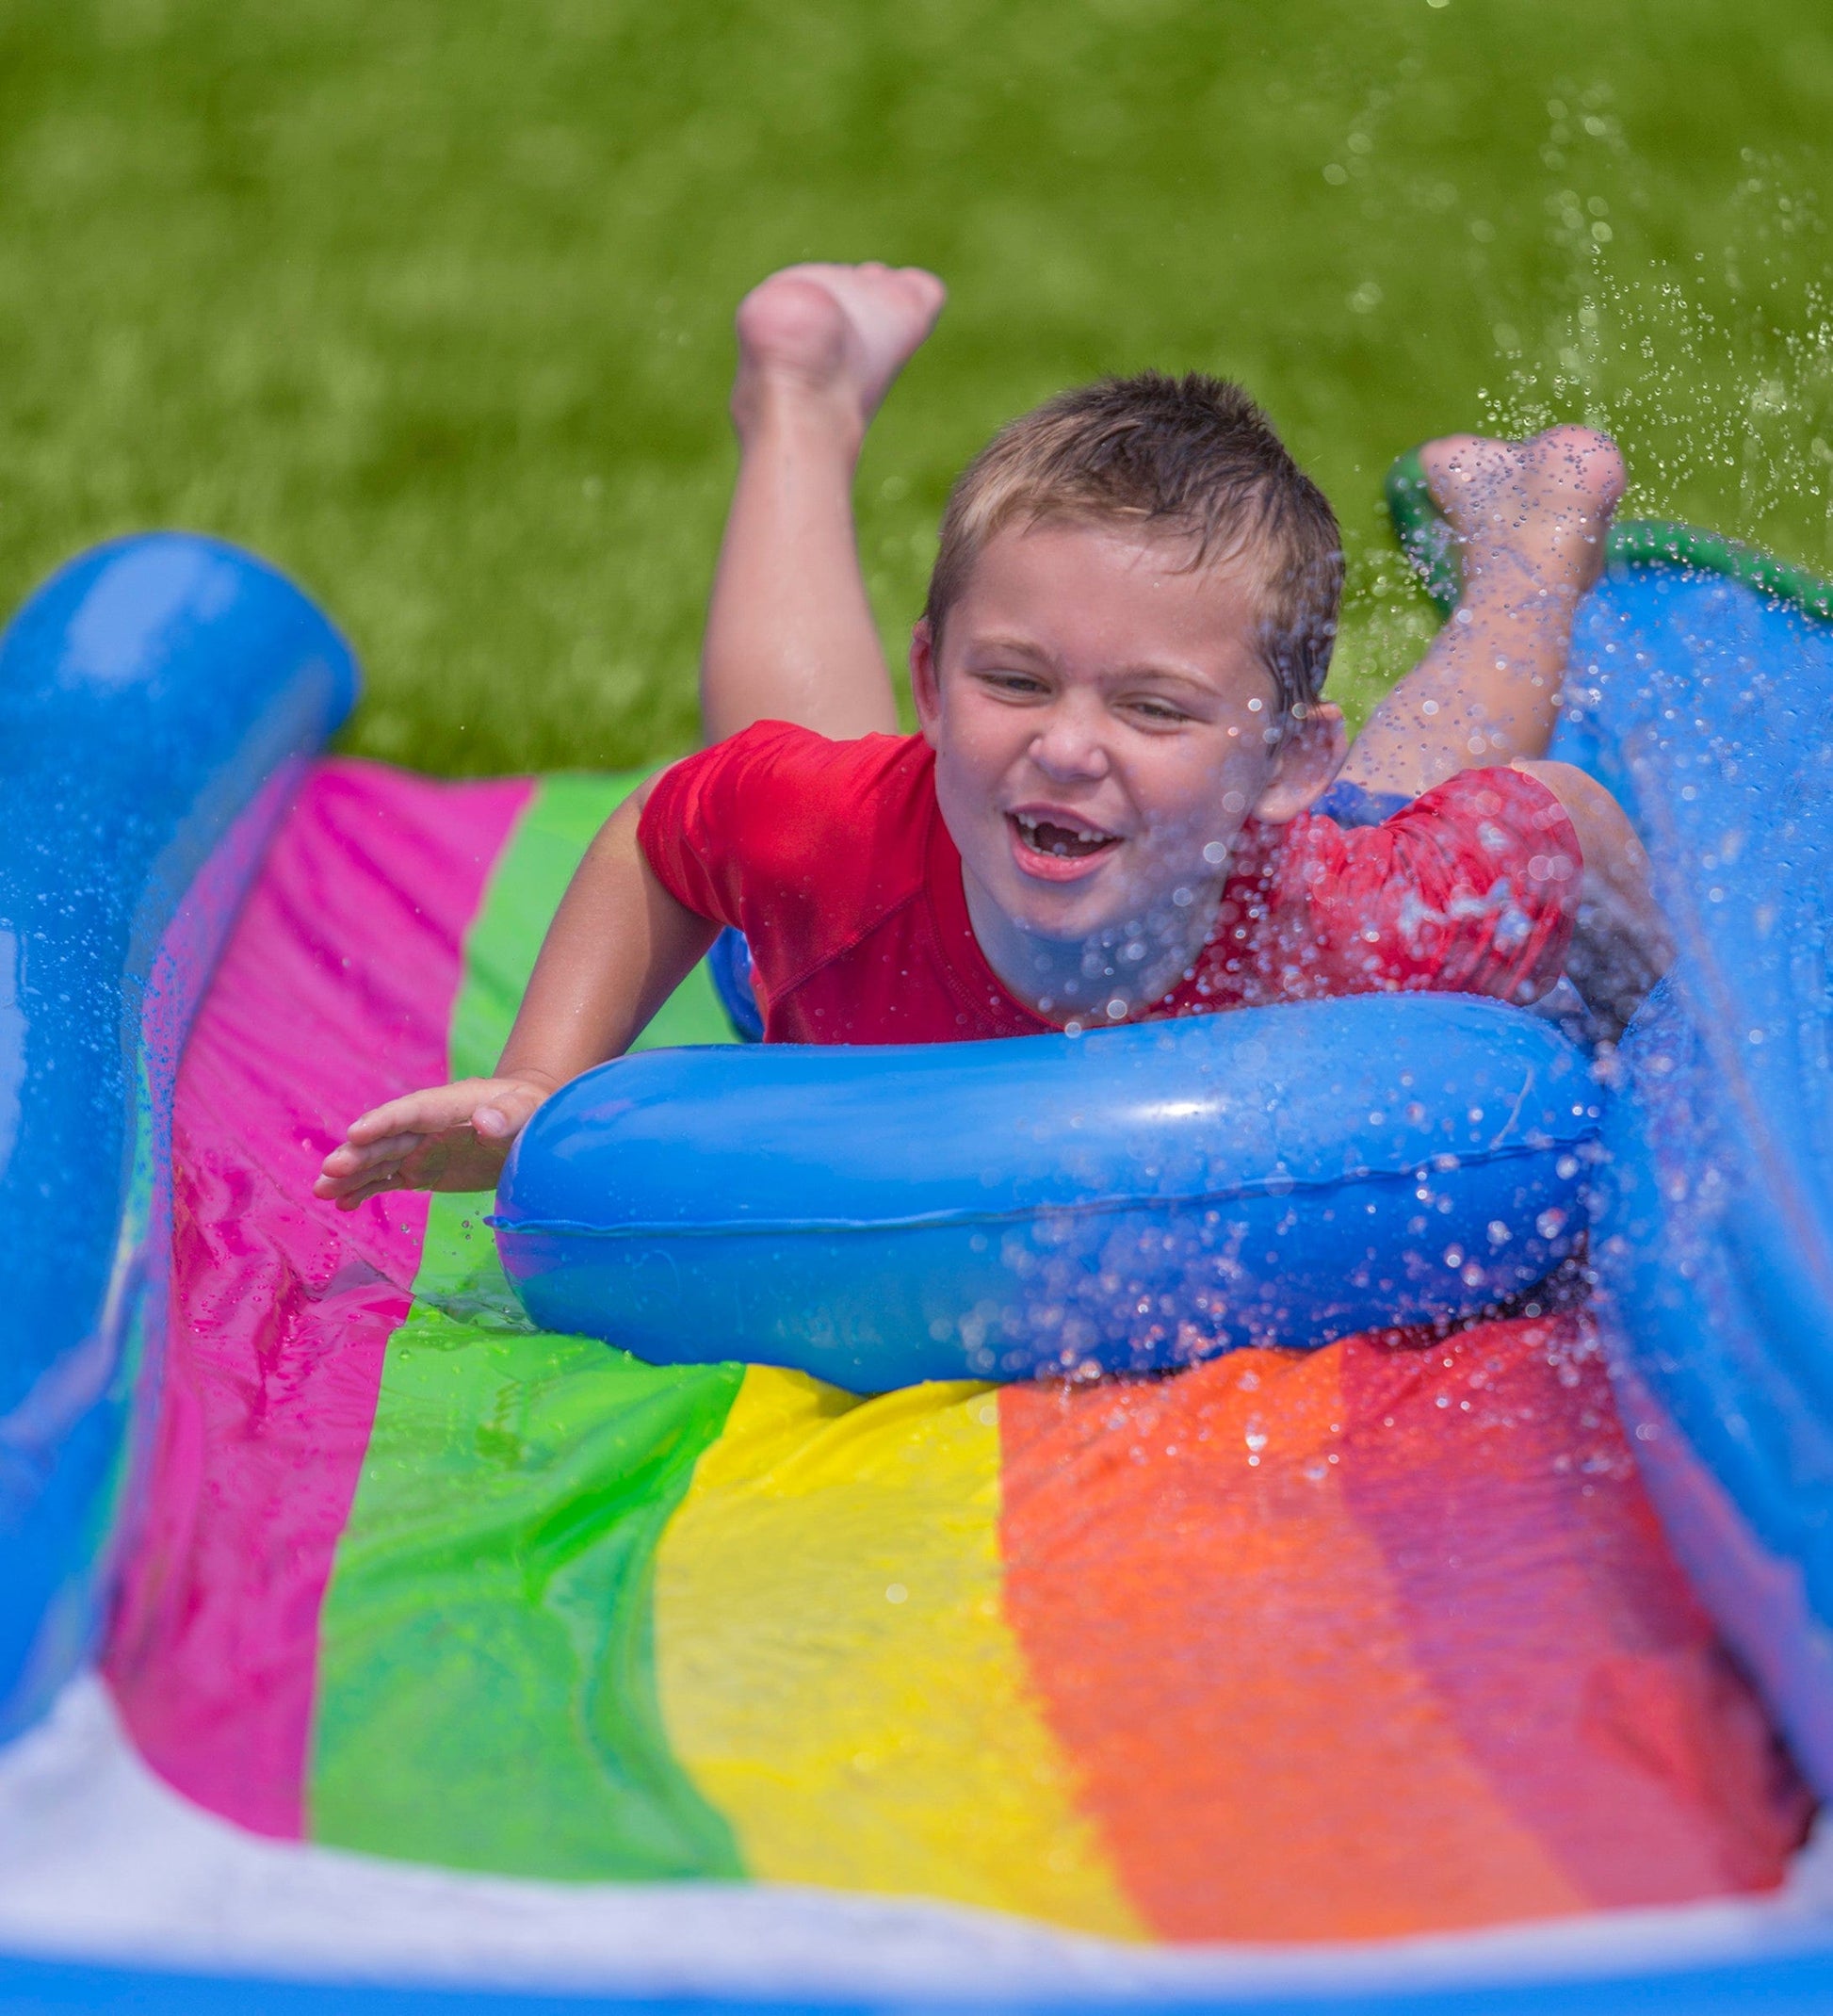 12-Foot Inflatable Rainbow Misted Water Slide with Splash Pool